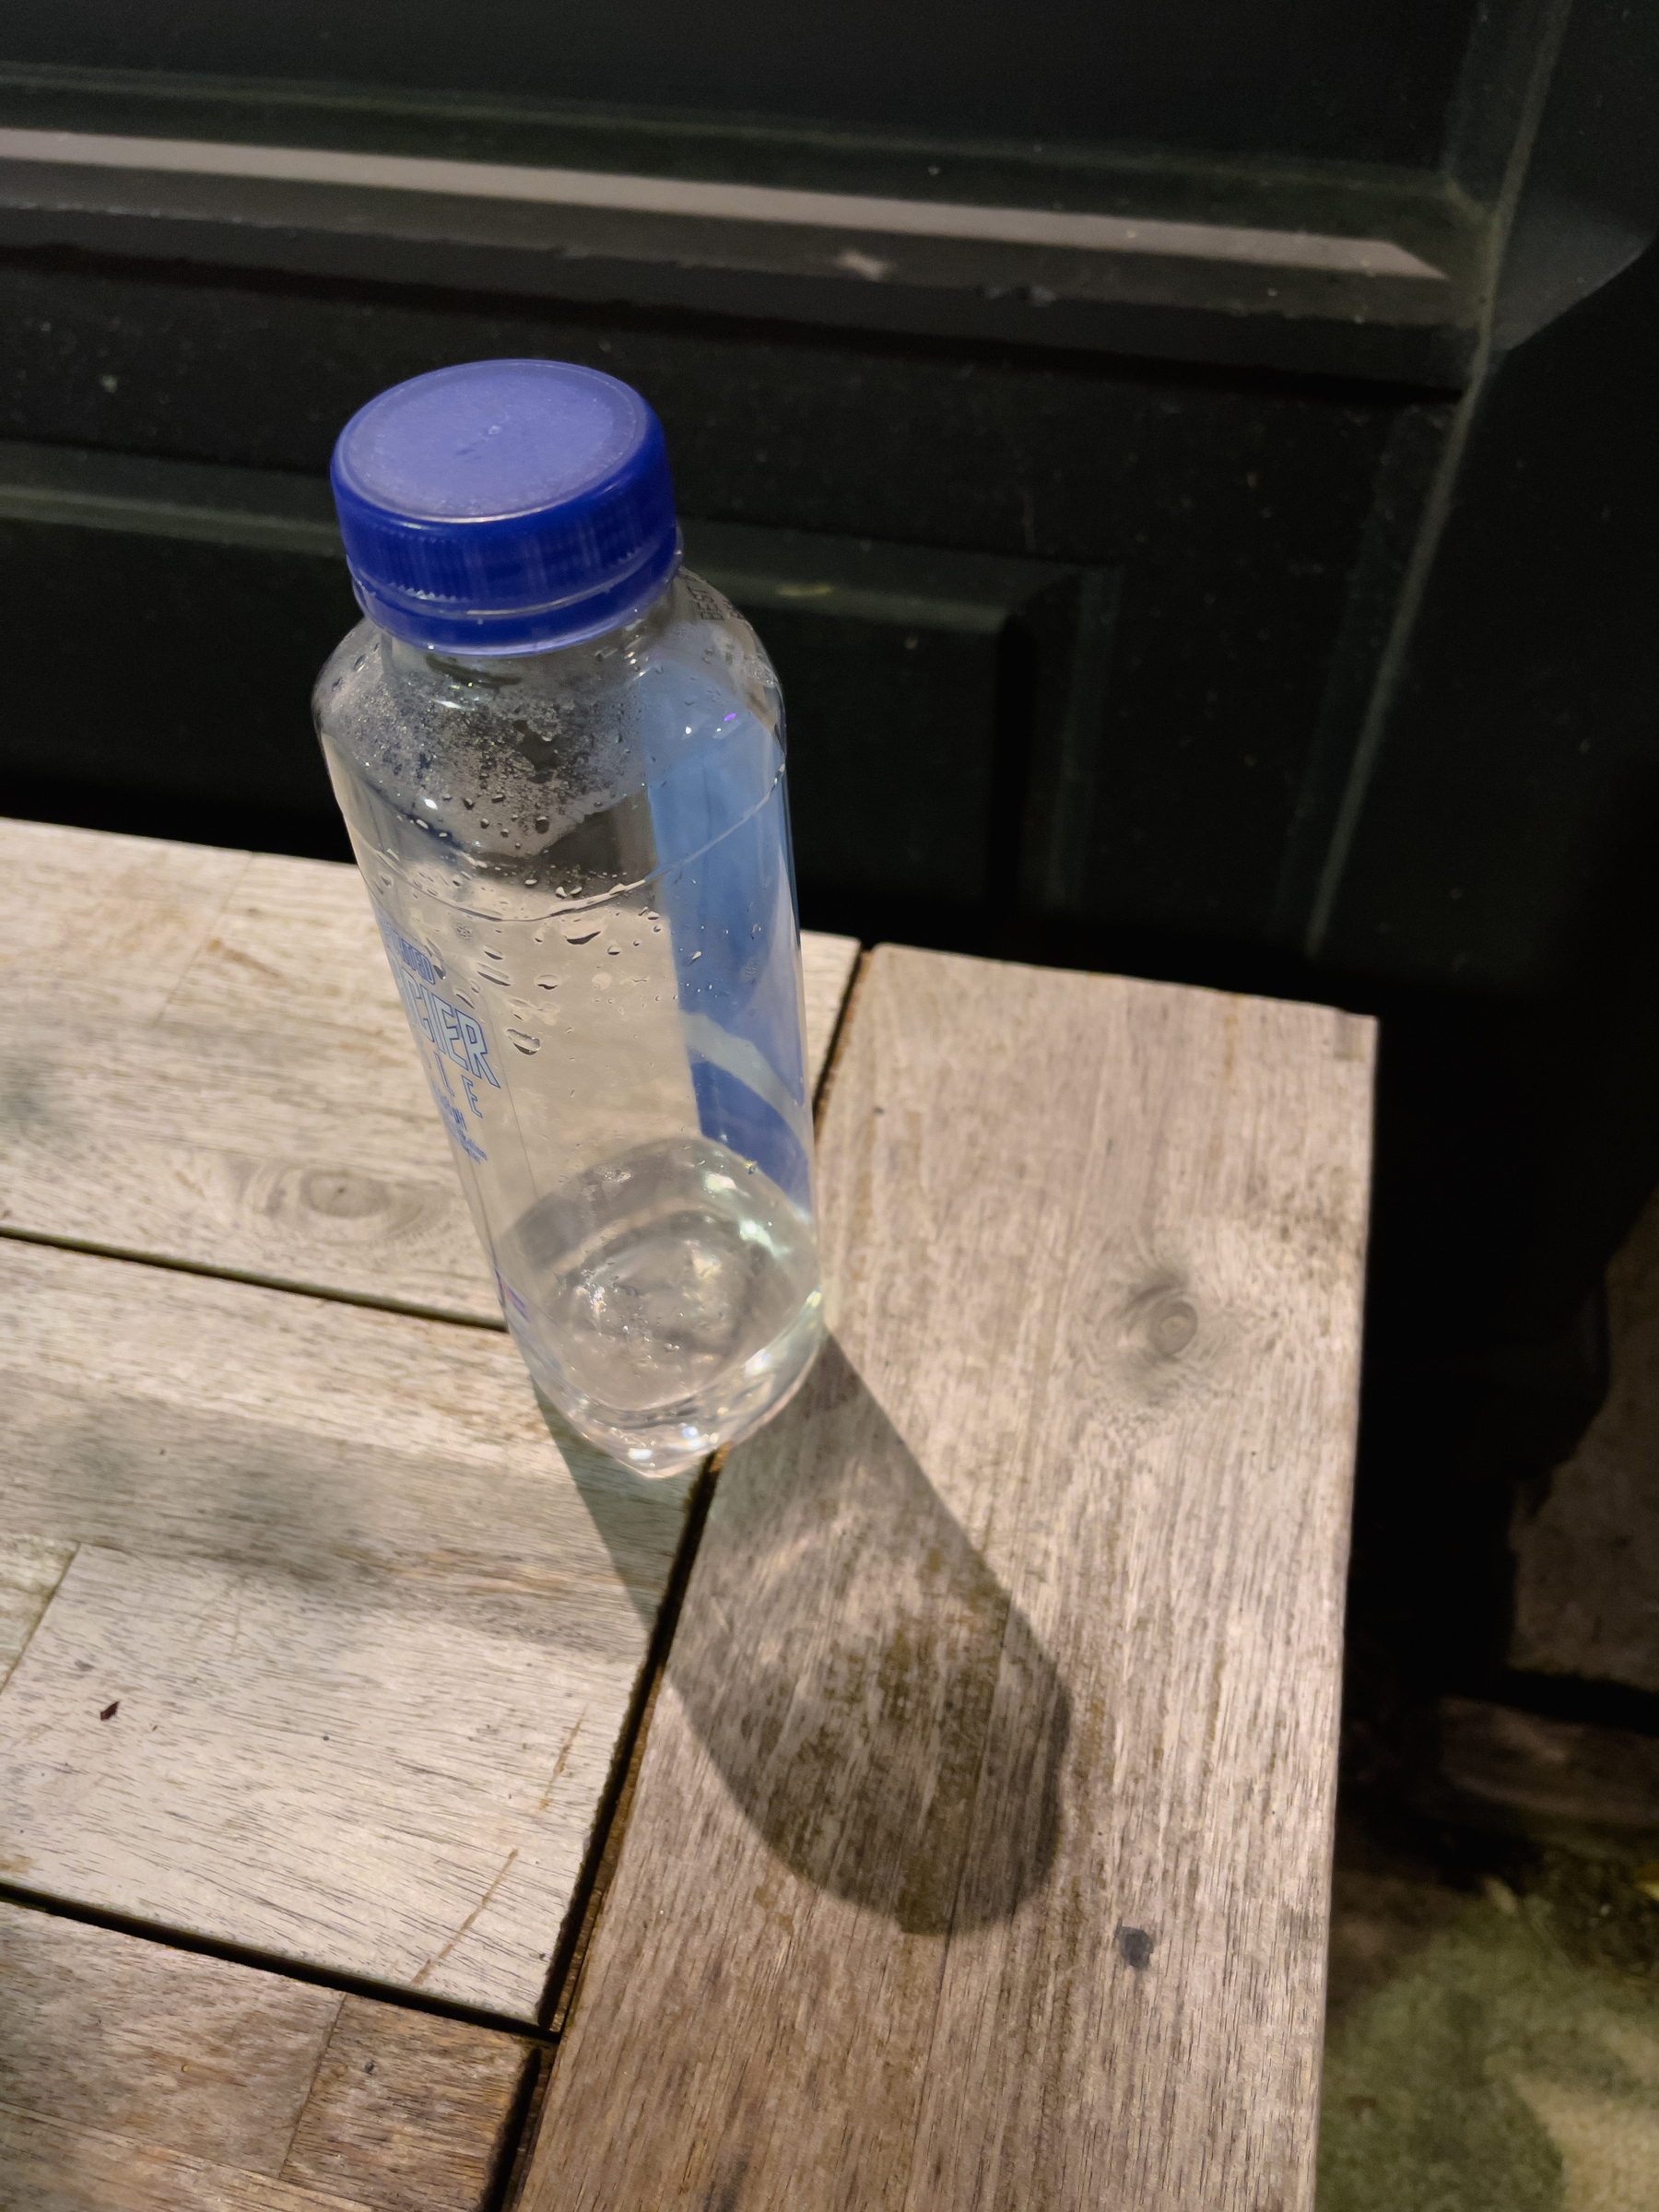 Plastic water bottle on a bench outside a shop window, shop lights illuminating it.